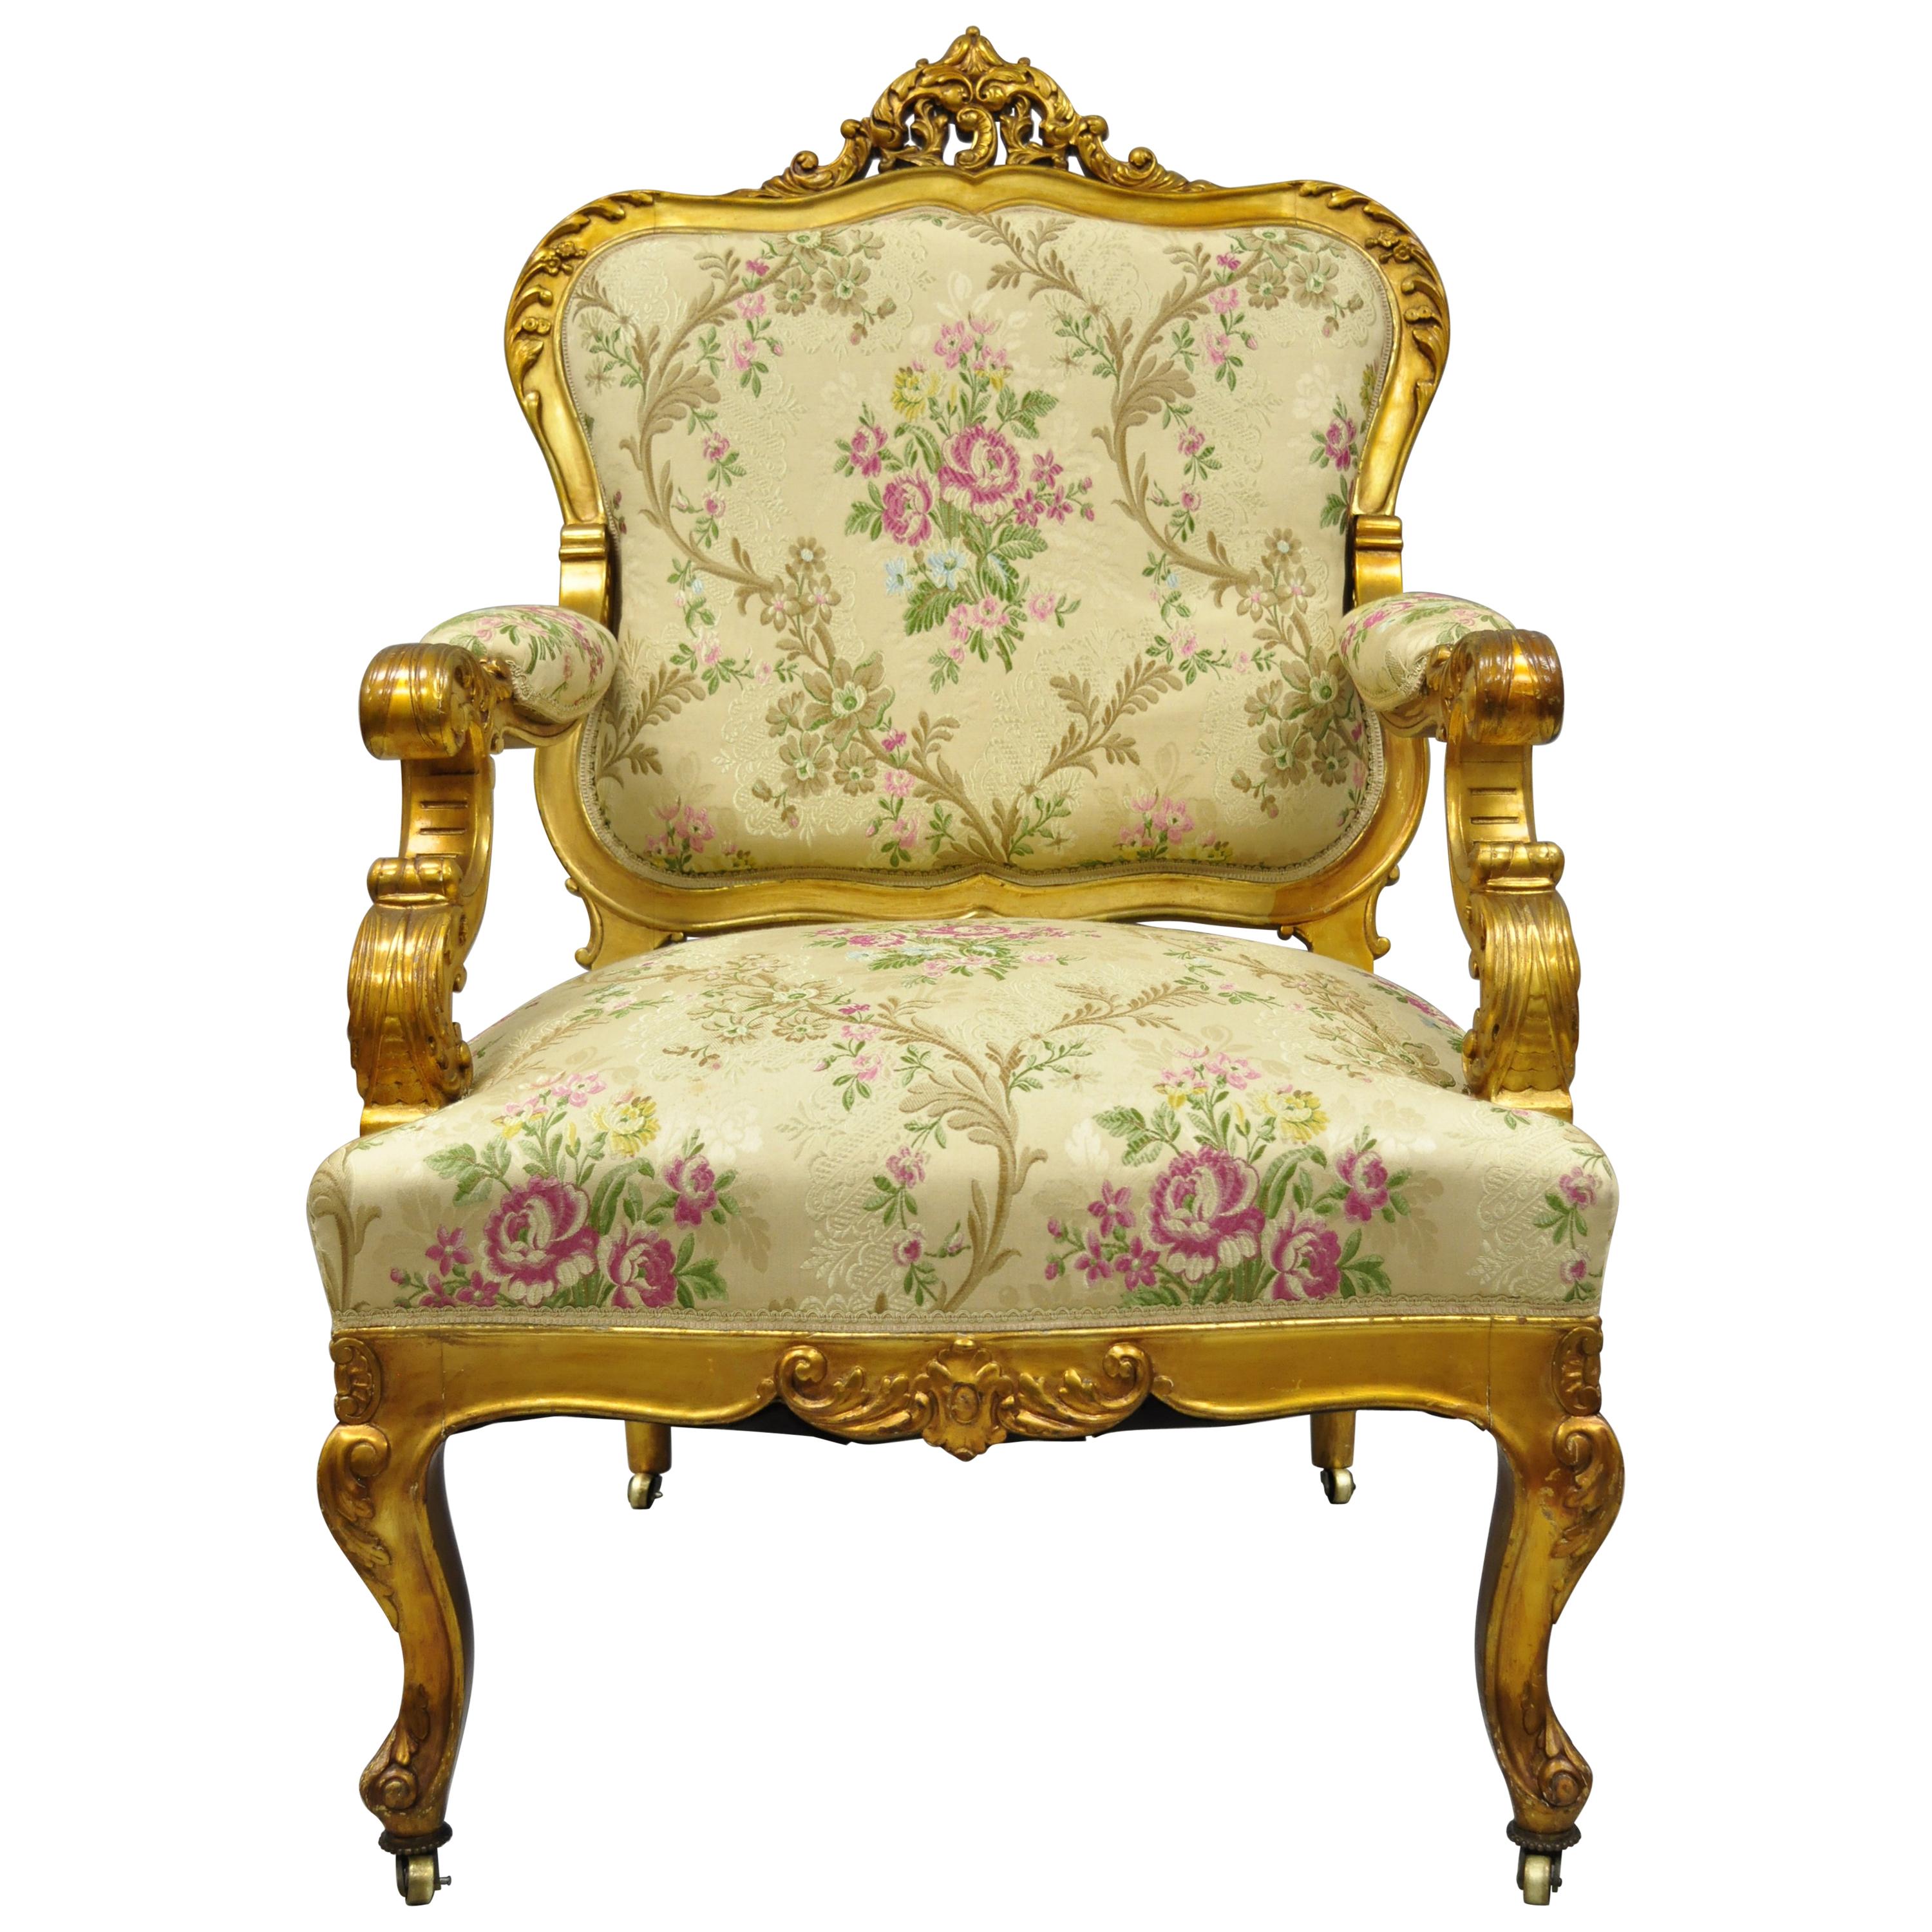 1920er Jahre Französischer Louis XV Rokoko-Sessel, vergoldeter Parlor-Sessel